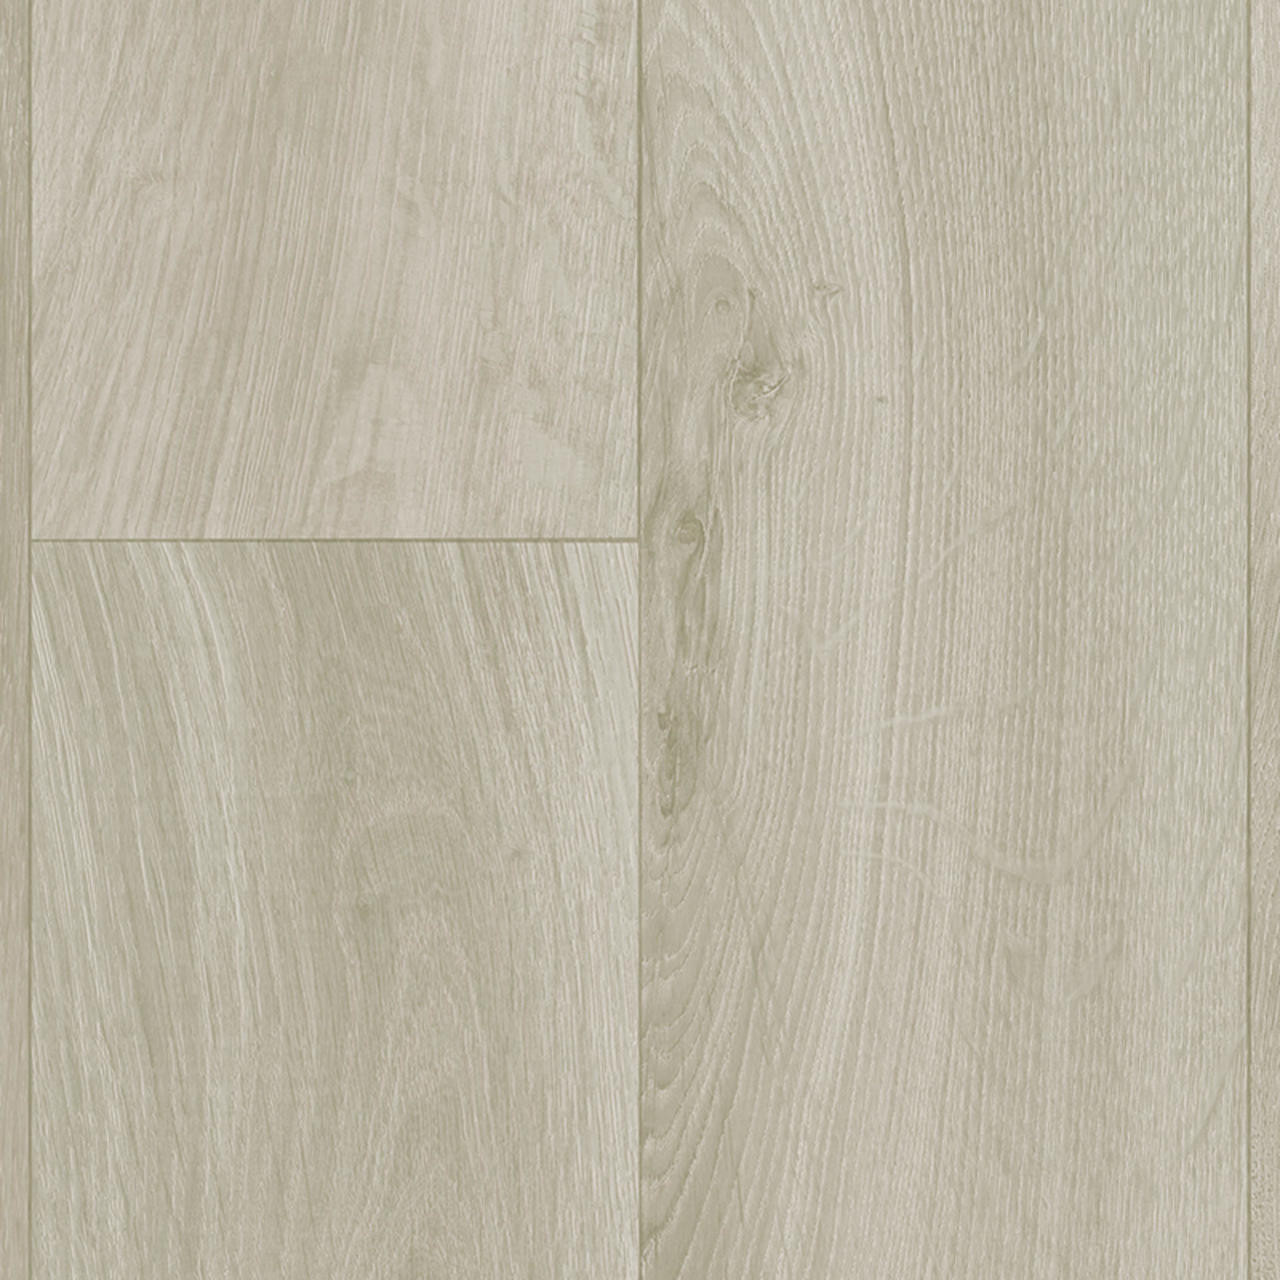 Glad uheldigvis Teenager Tarkett Safetred Wood Traditional Oak Grey White | Floormart.co.uk